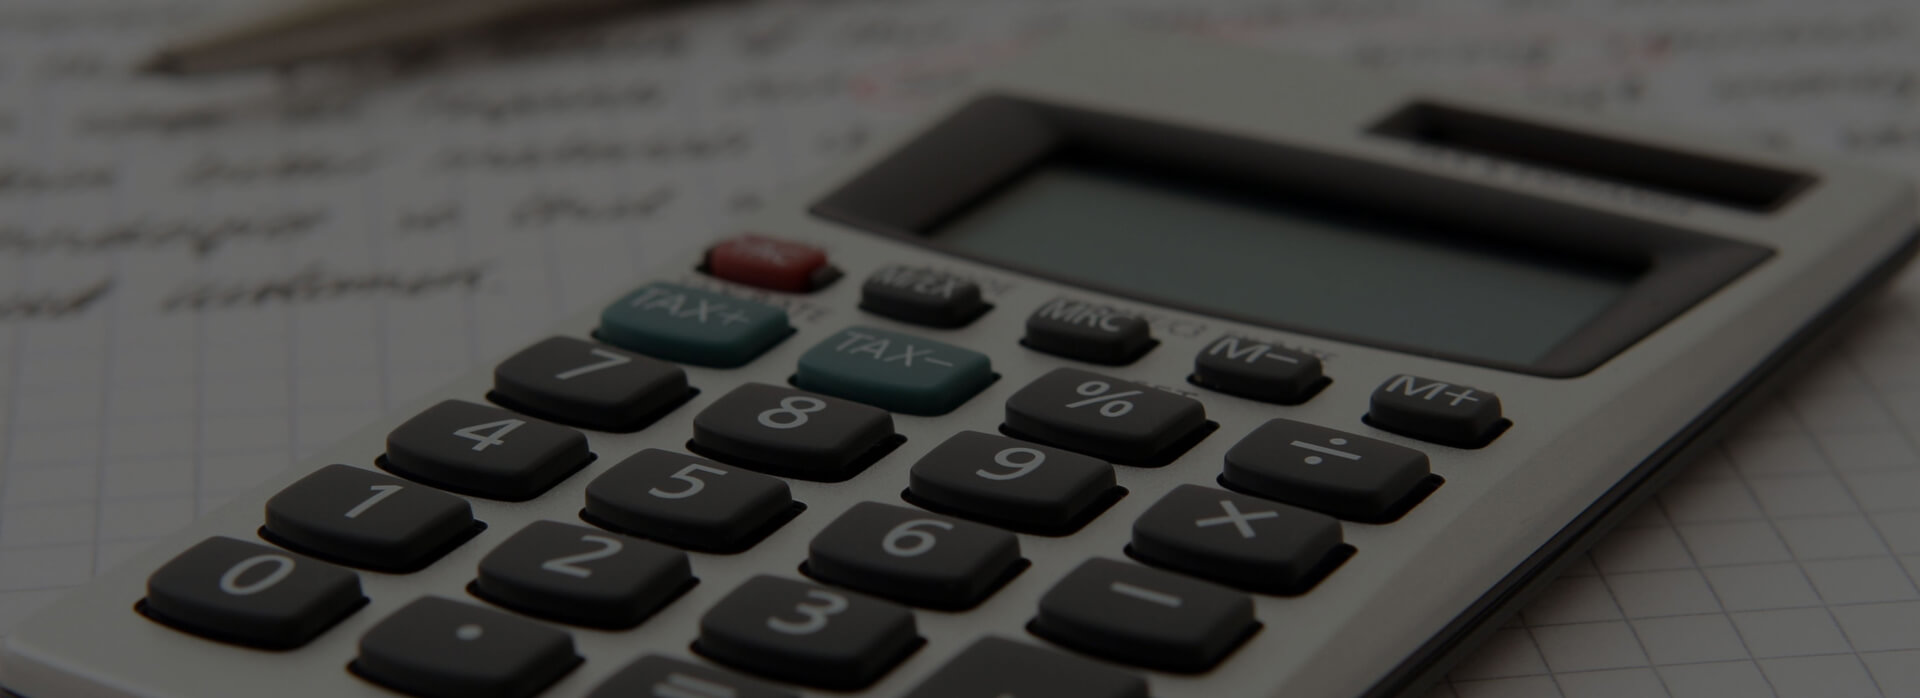 Australian Tax Refund Calculator Get Your Estimate Now!